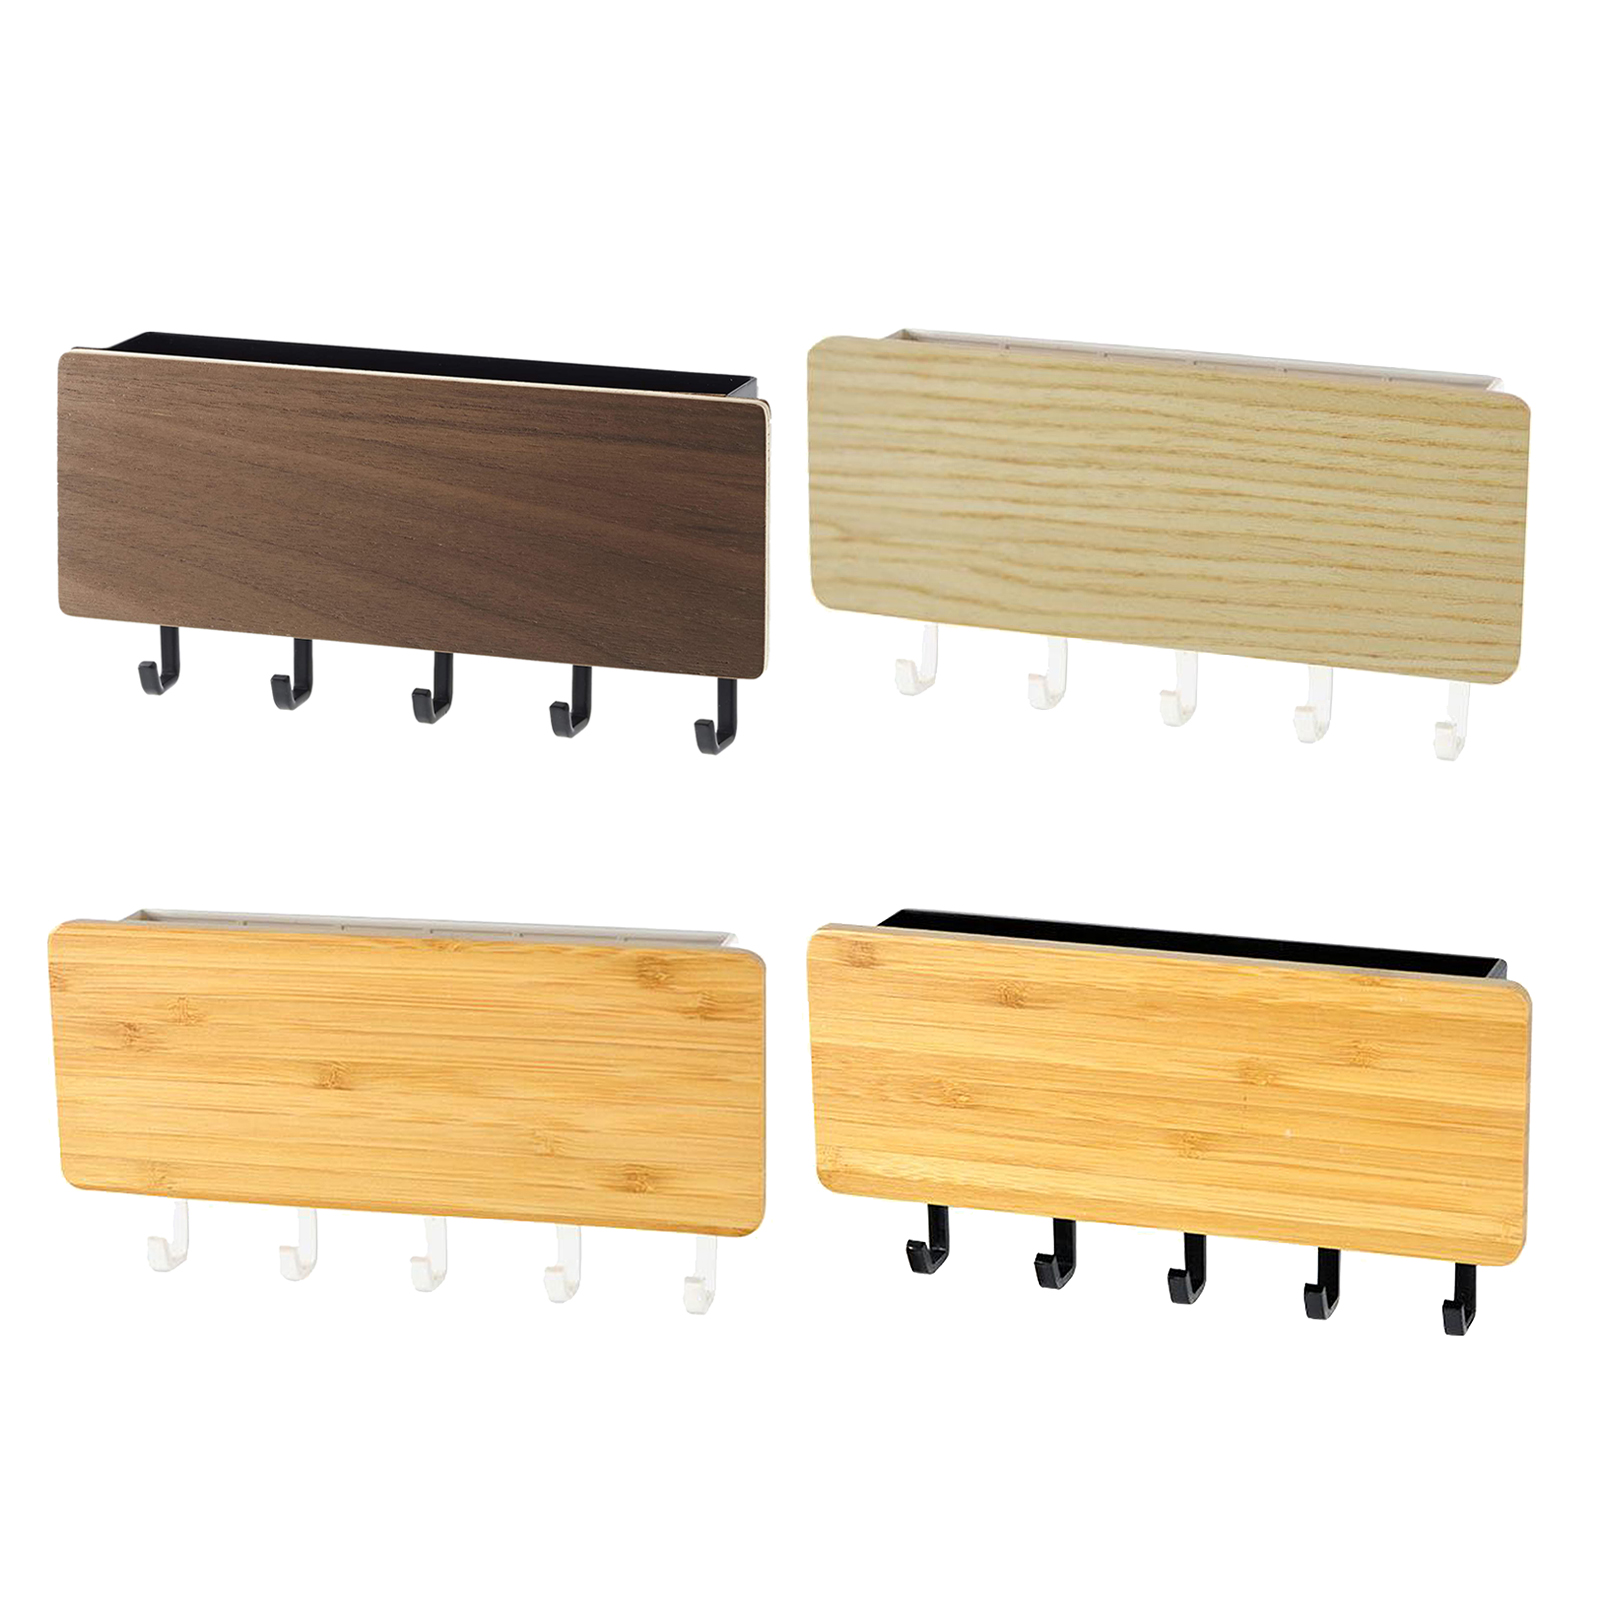 kesoto Creative Wall Mounted Adhesive Shelf Hooks Storage Rack Key Holder Beige